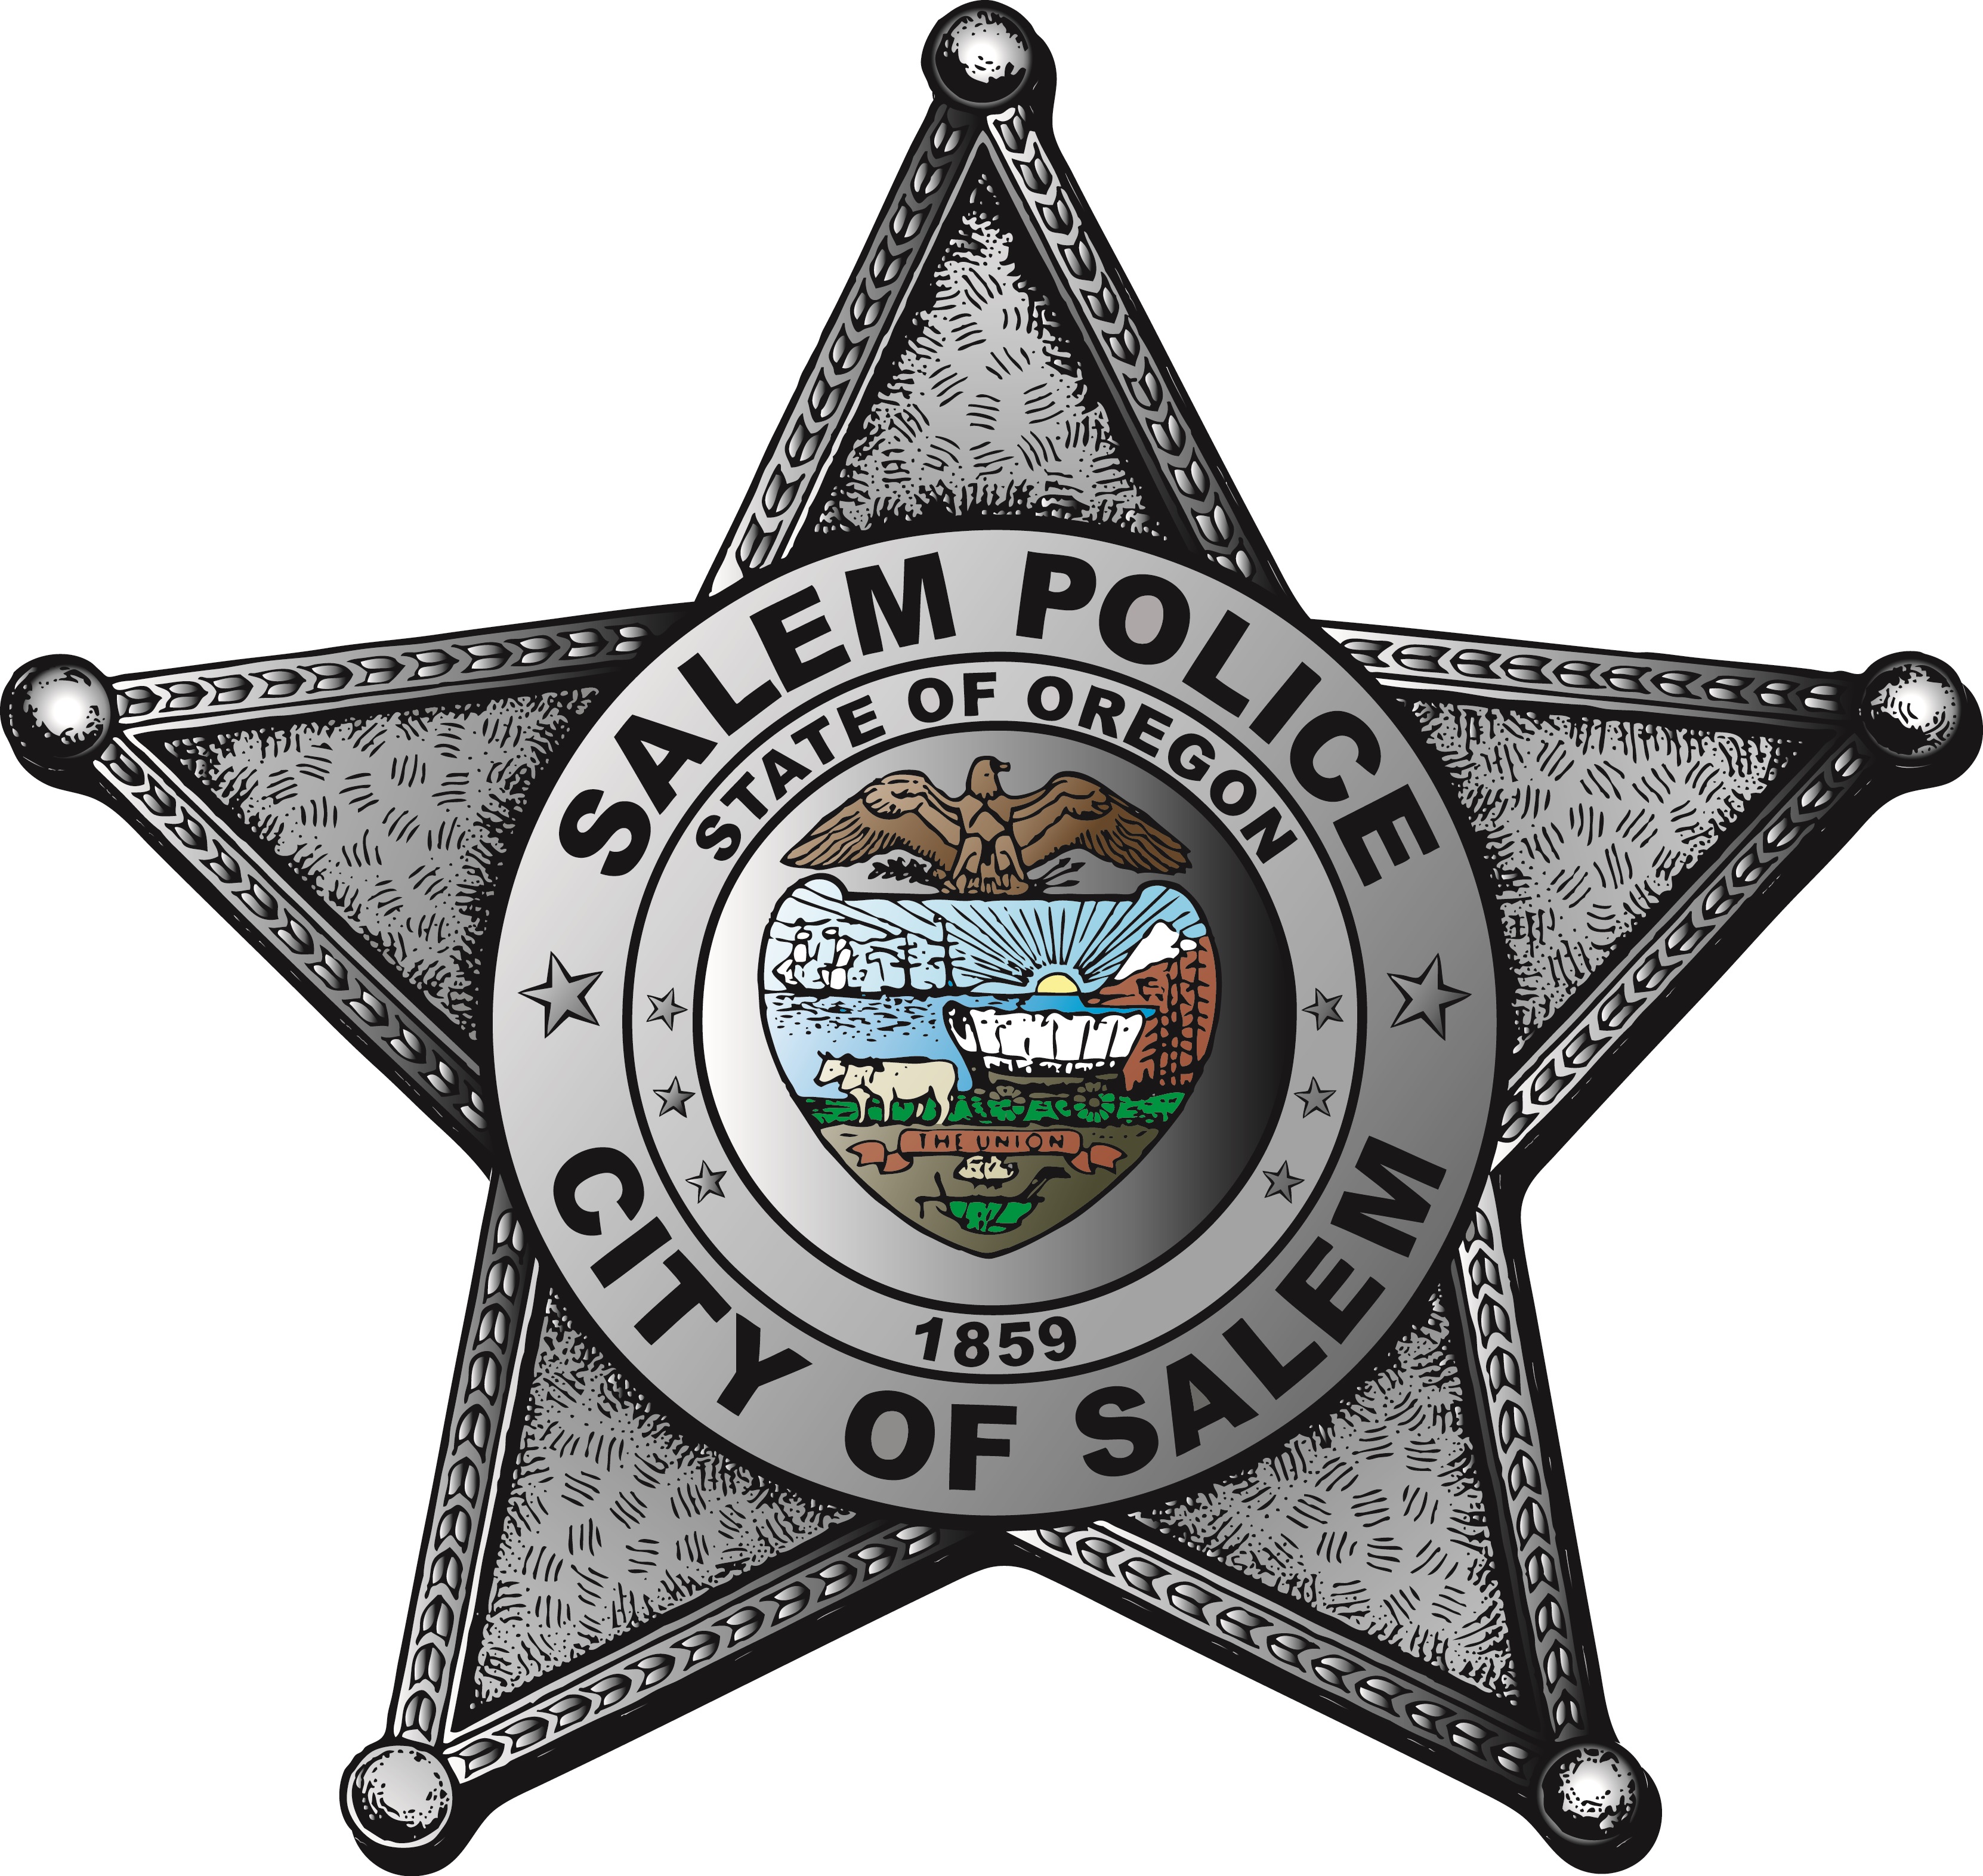 Salem police star badge